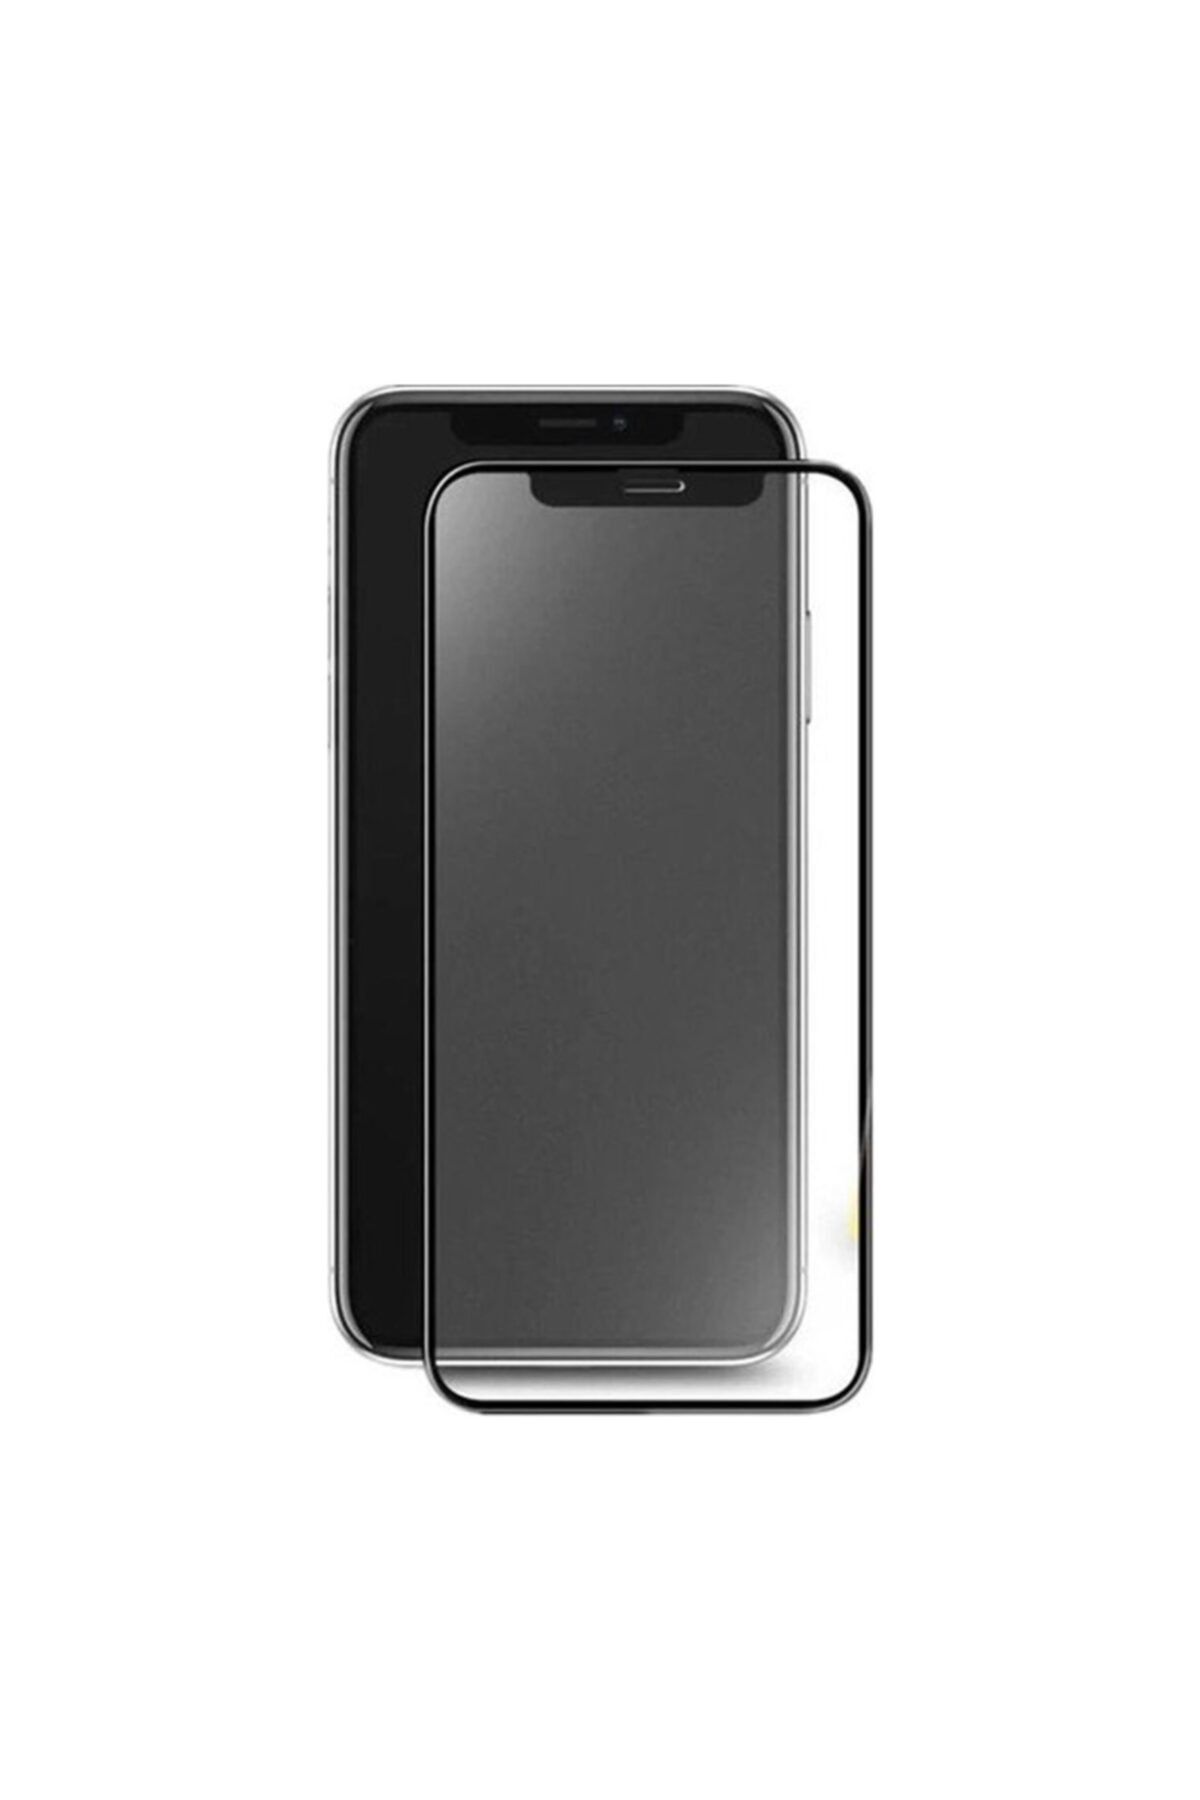 Tiger Iphone 12 Pro Max Uyumlu Mat Seramik Nano 9d Ekran Tam Kaplayan Kırılmaz Cam Ekran Koruyucu